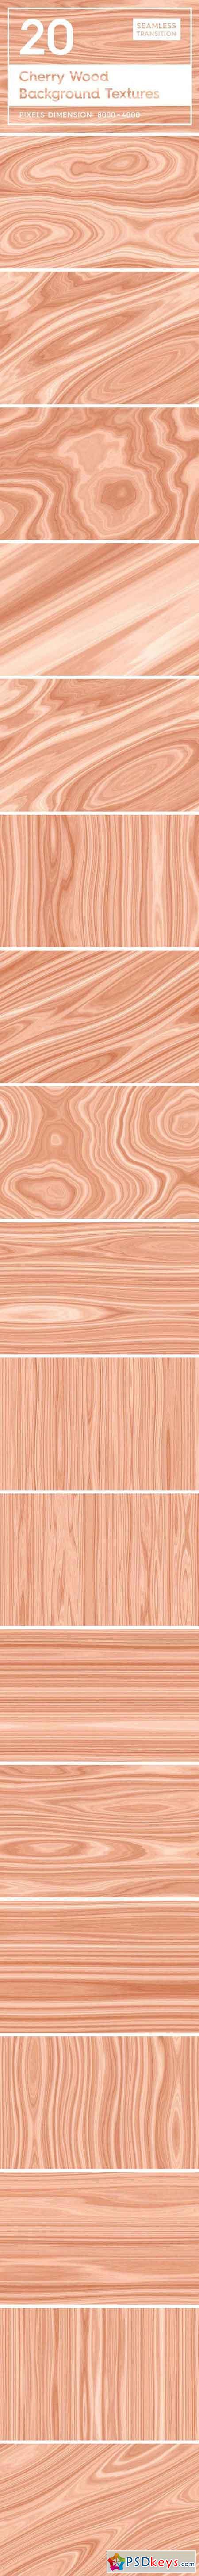 20 Cherry Wood Background Textures 2167059